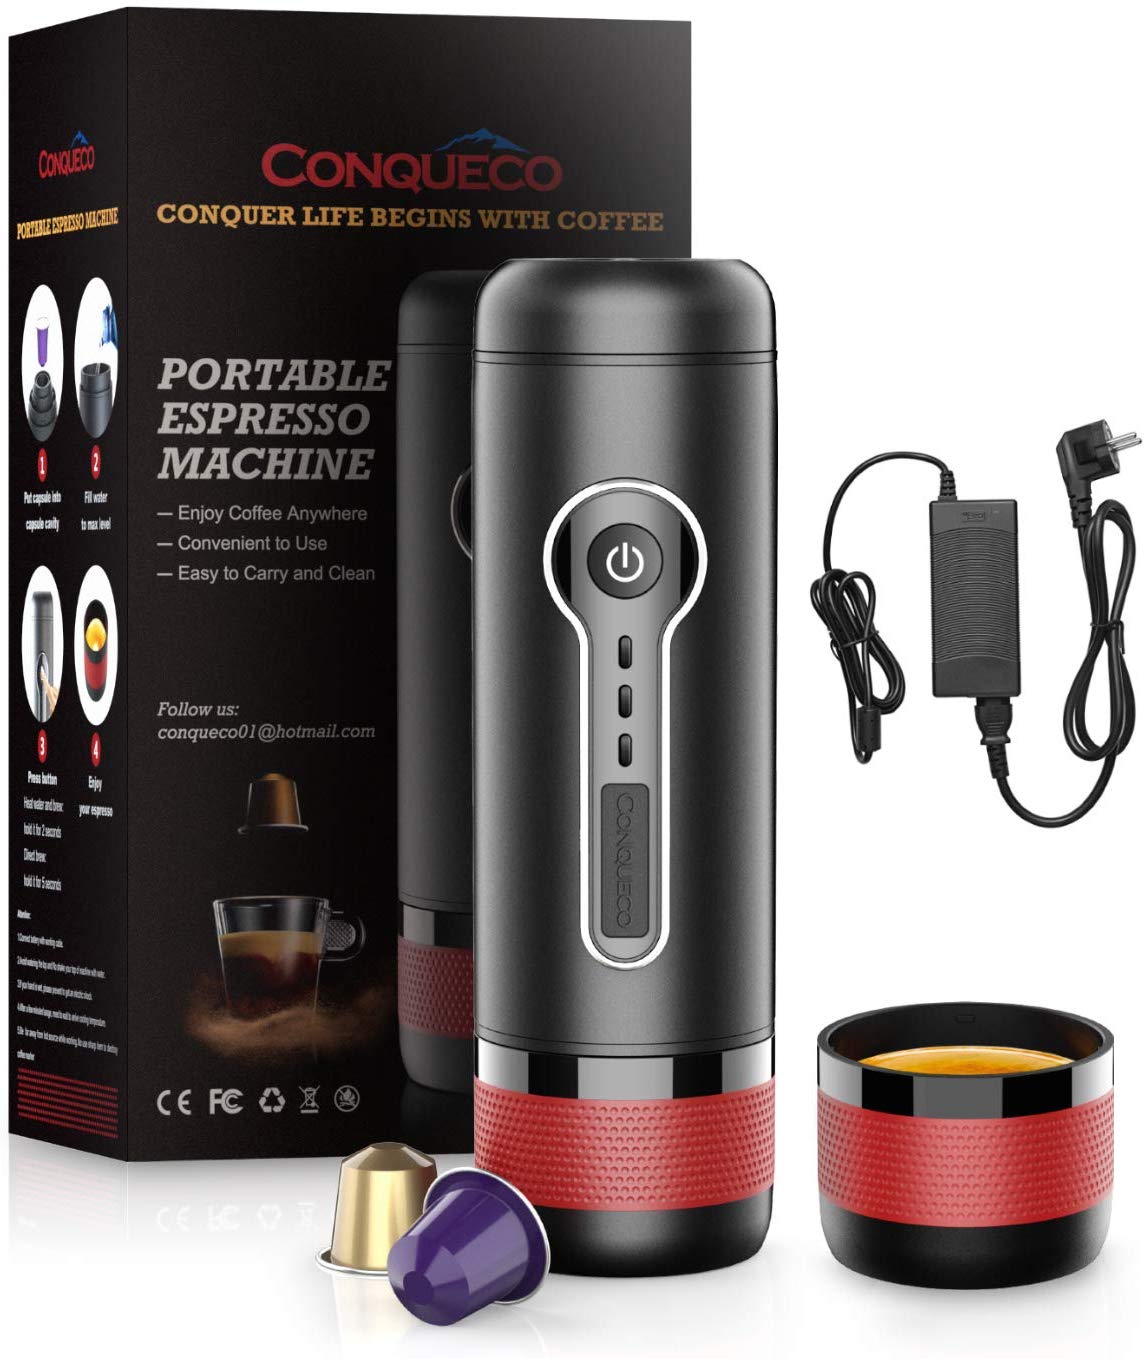 CONQUECO Portable Espresso Maker Travel Coffe…